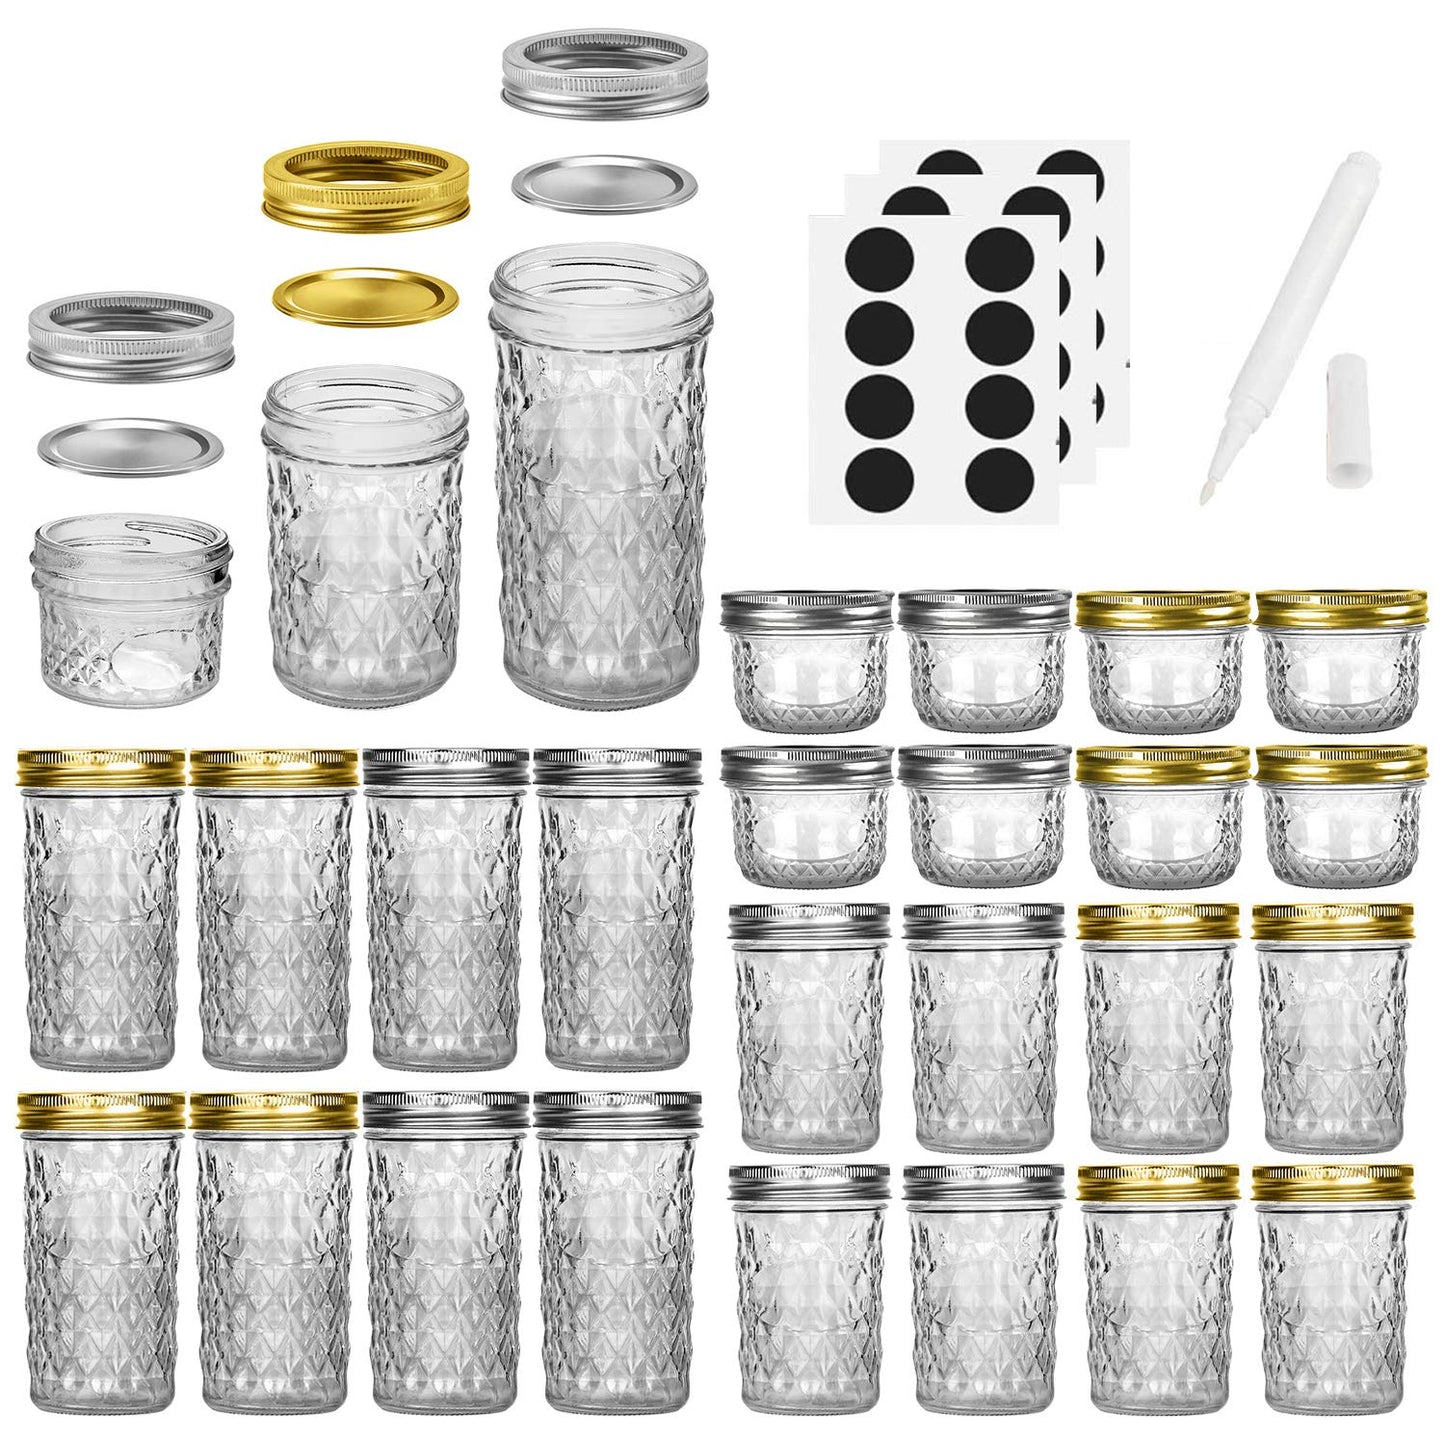 Mason Jars Canning Jars, 24 Pack Jelly Jars With Regular Lids, Ideal for Jam, Honey, Wedding / Shower Favors, DIY Magnetic Spice Jars - 4 OZ x 8, 8 OZ x 8, 12 OZ x 8 (4oz -8oz-12oz)